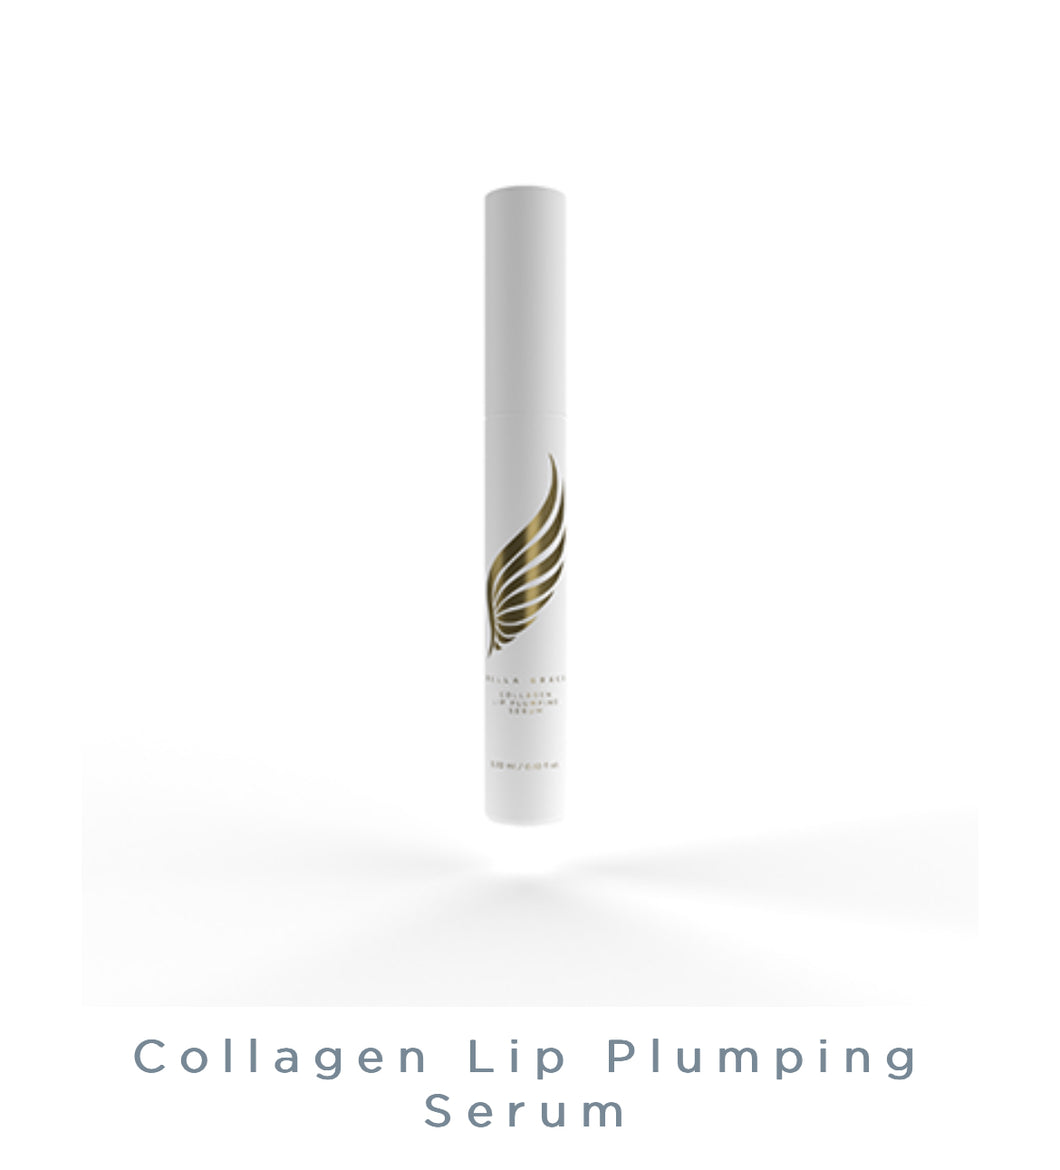 Collagen Lip Plumping Serum